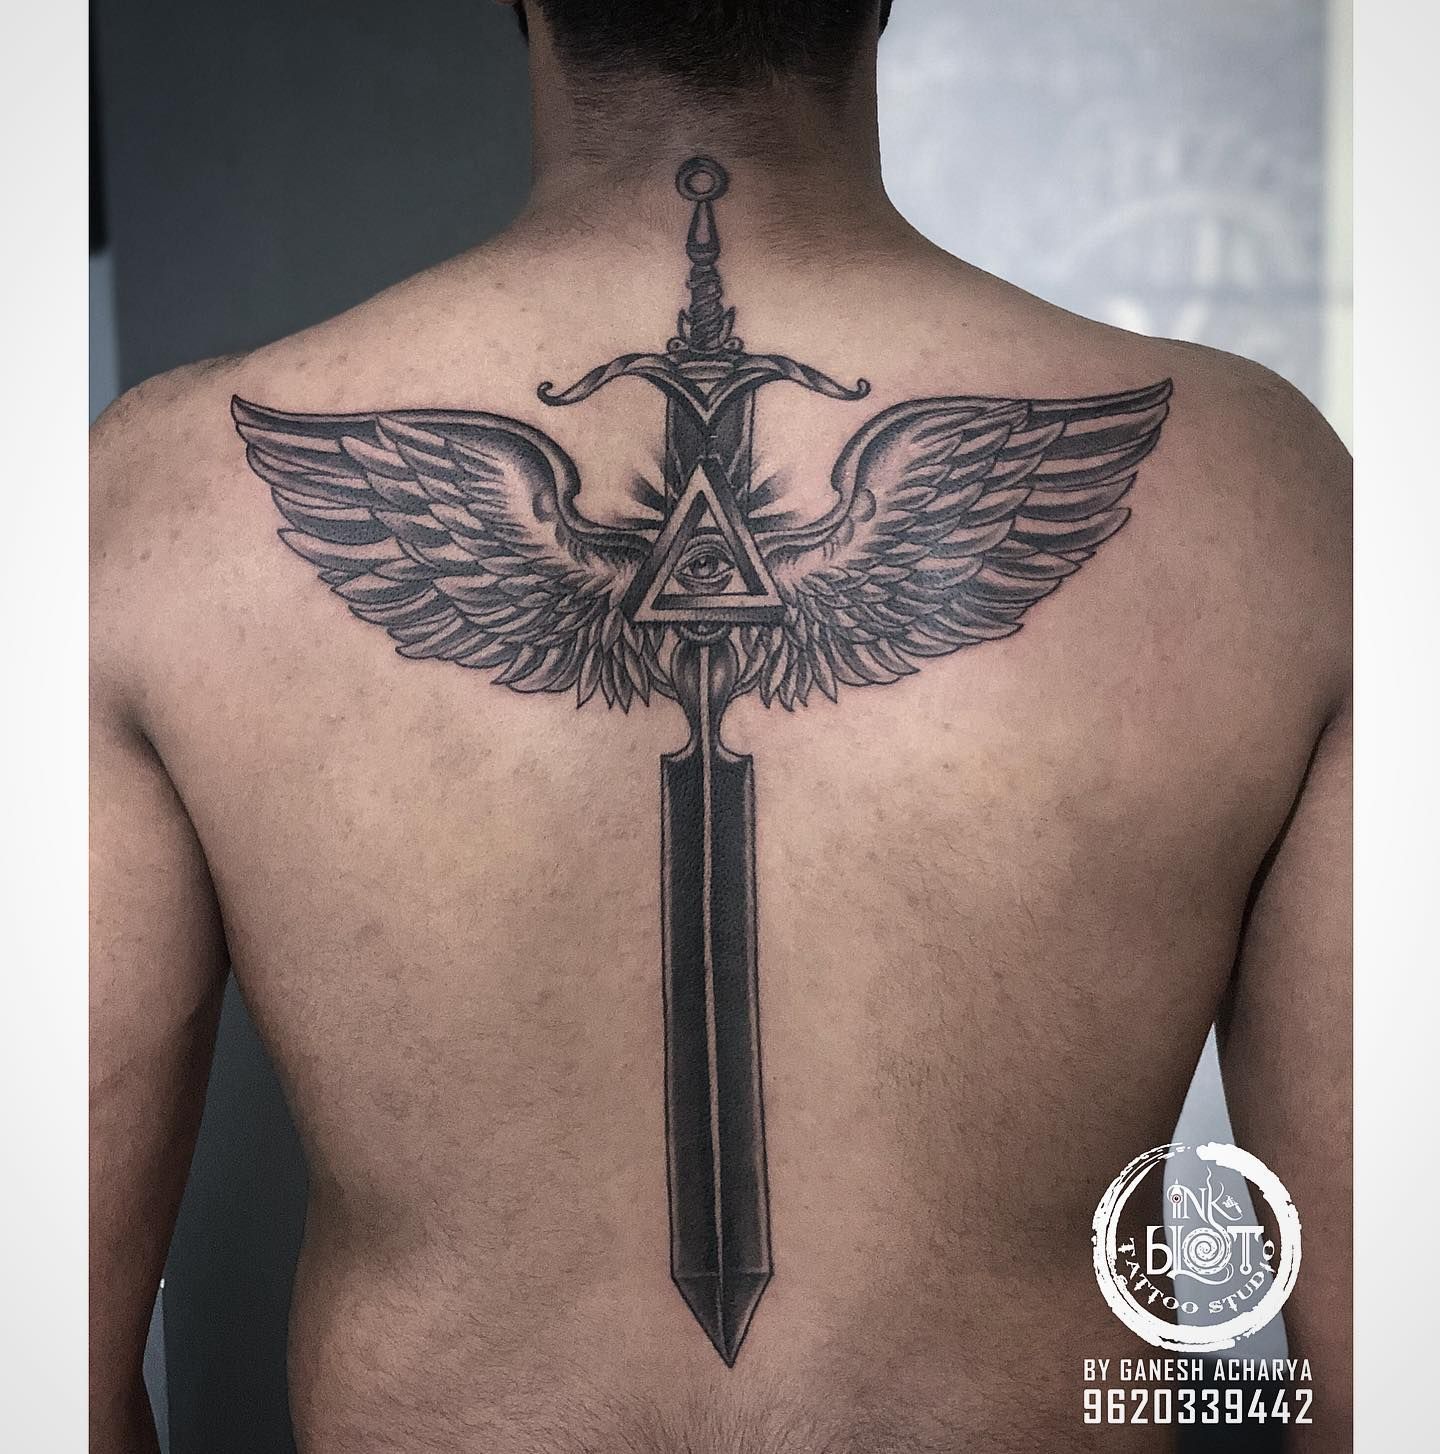 Tattoo uploaded by Samuil Petrov  tattoo angel sword honor justice  purpose angeltattoo  Tattoodo